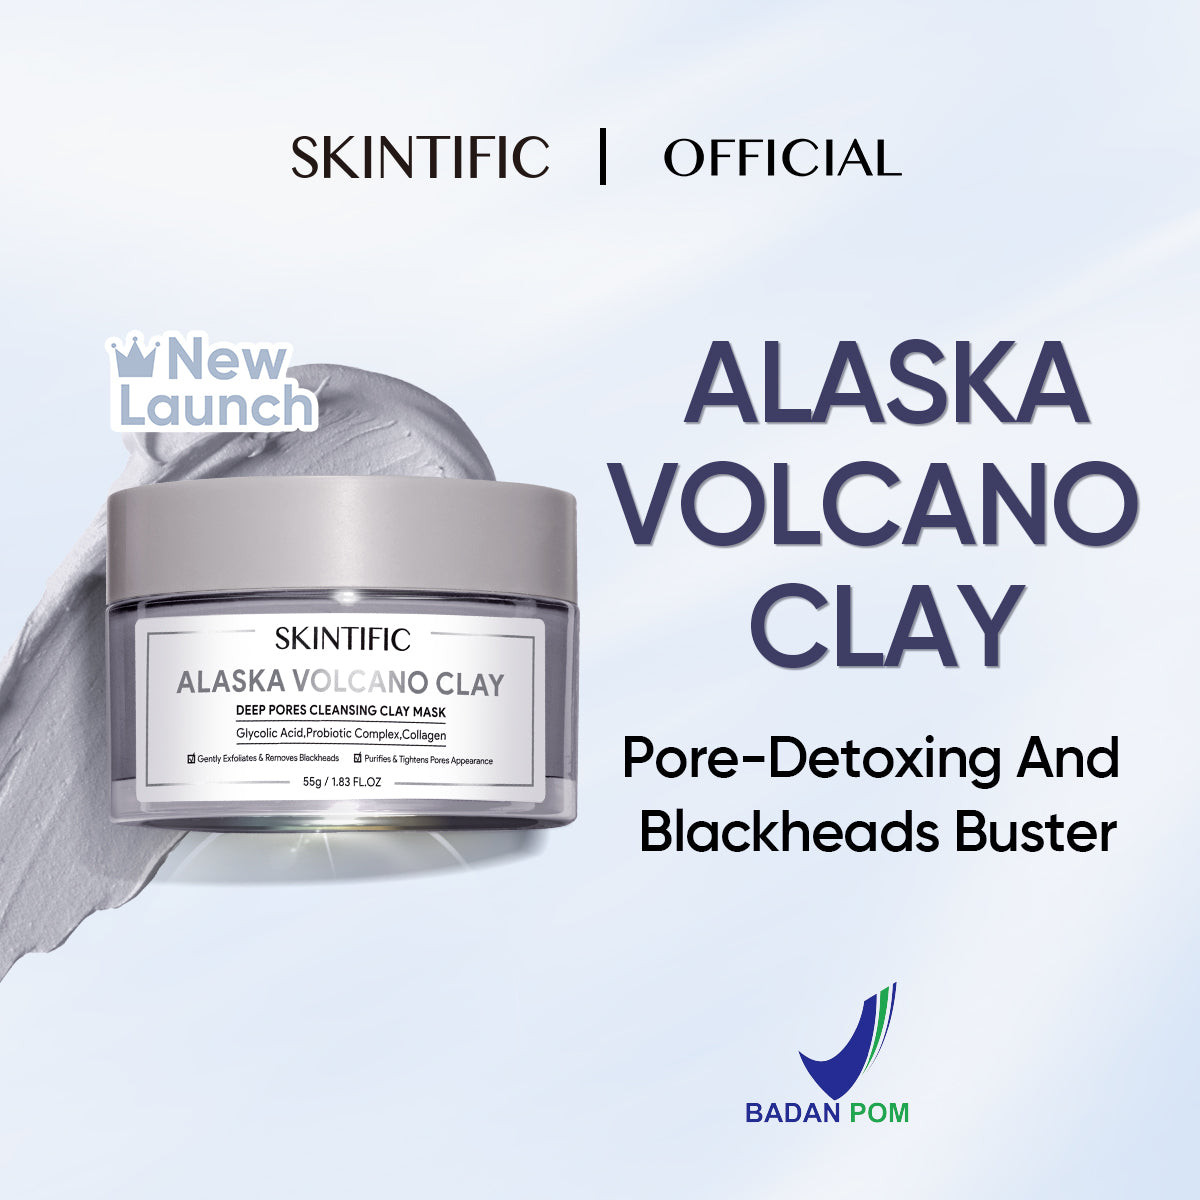 Alaska Volcano Deep Pores Cleansing Clay Mask